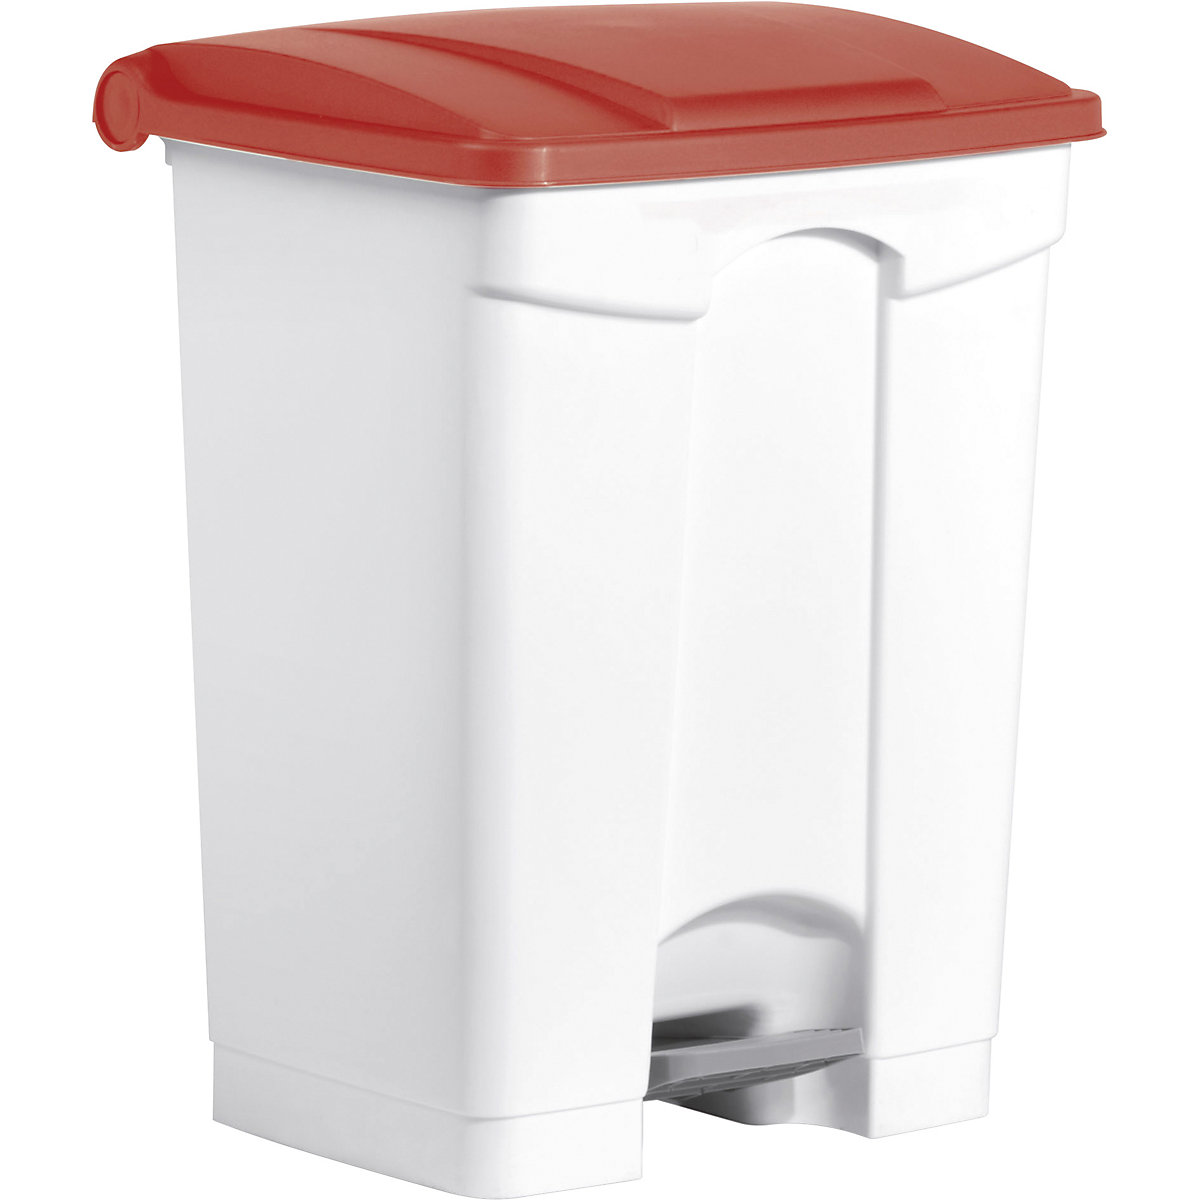 Pedal bin – helit, capacity 70 l, WxHxD 500 x 670 x 410 mm, white, red lid-5